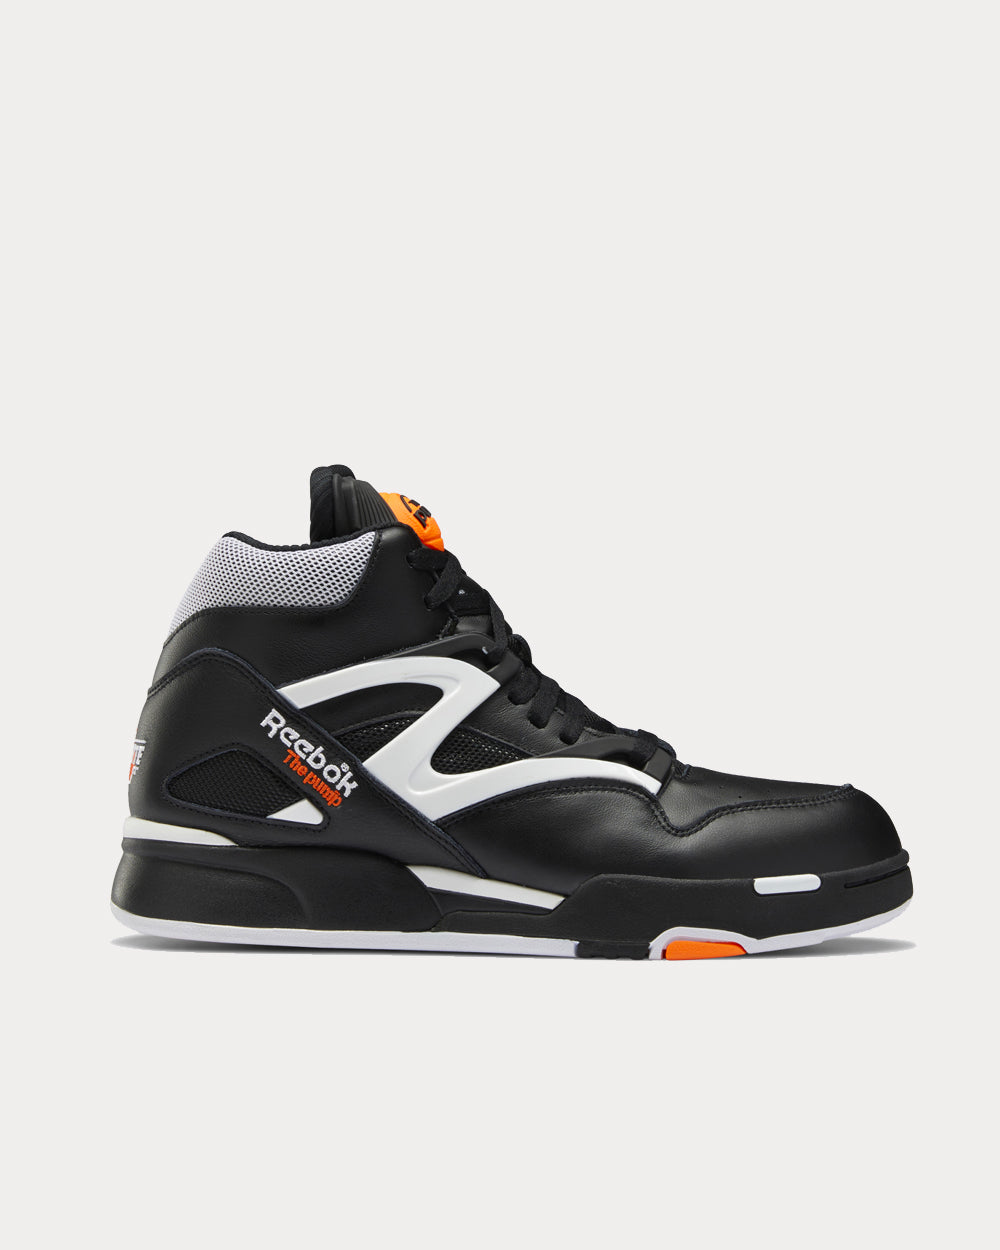 Reebok Pump Zone II Black / Cloud White / Wild Orange High Top Sneakers - Sneak in Peace